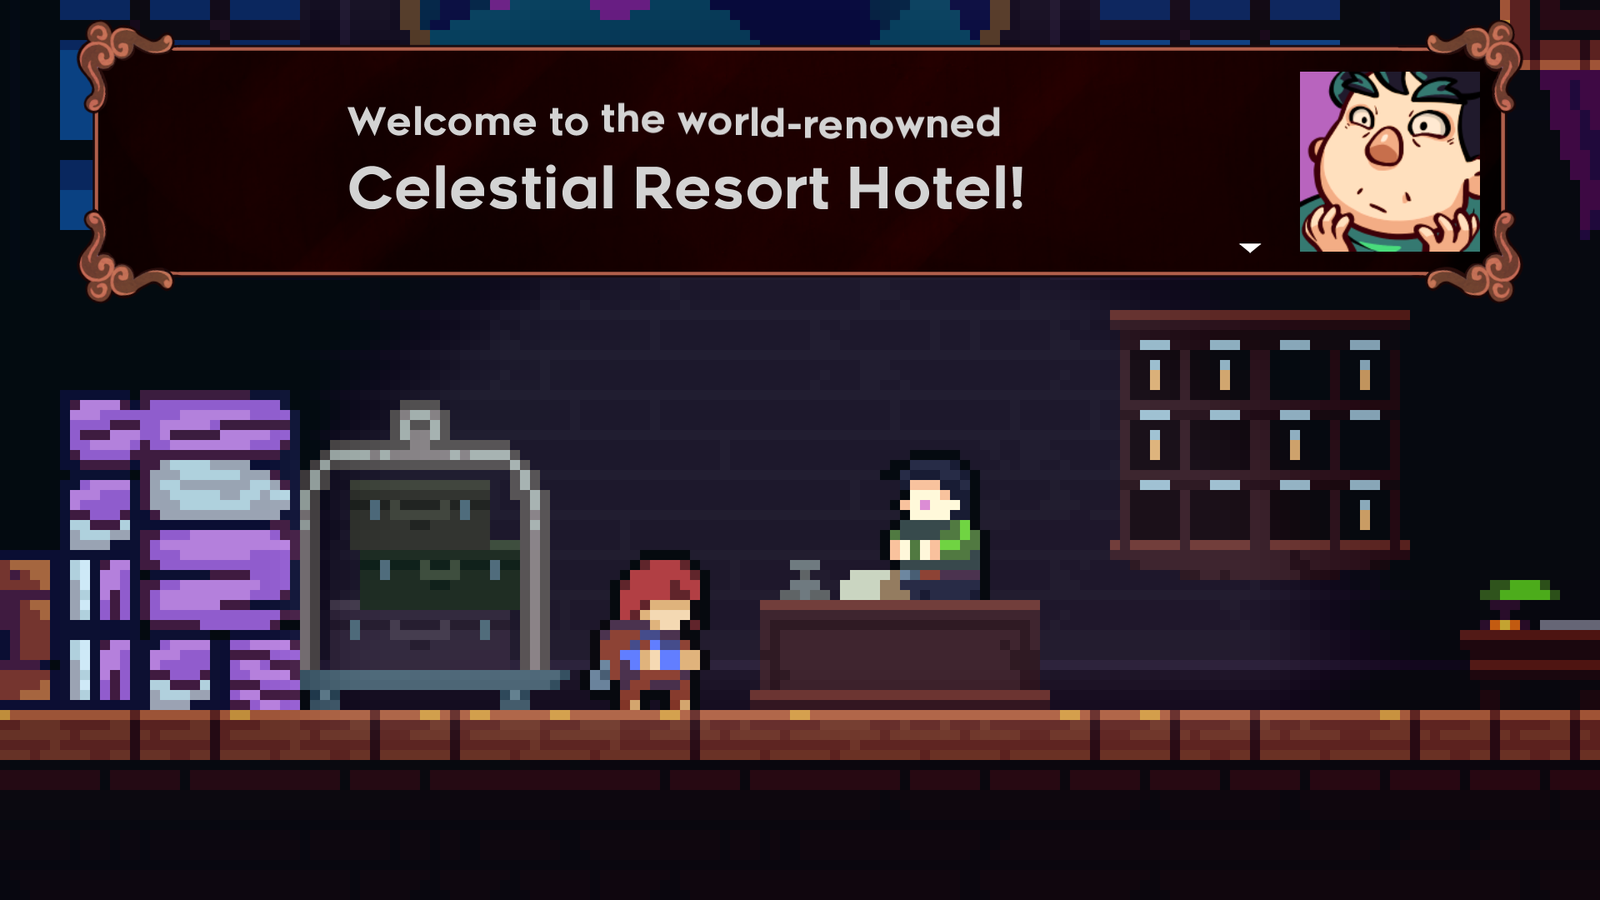 Madeline stops by the Celestial Resort Hotel